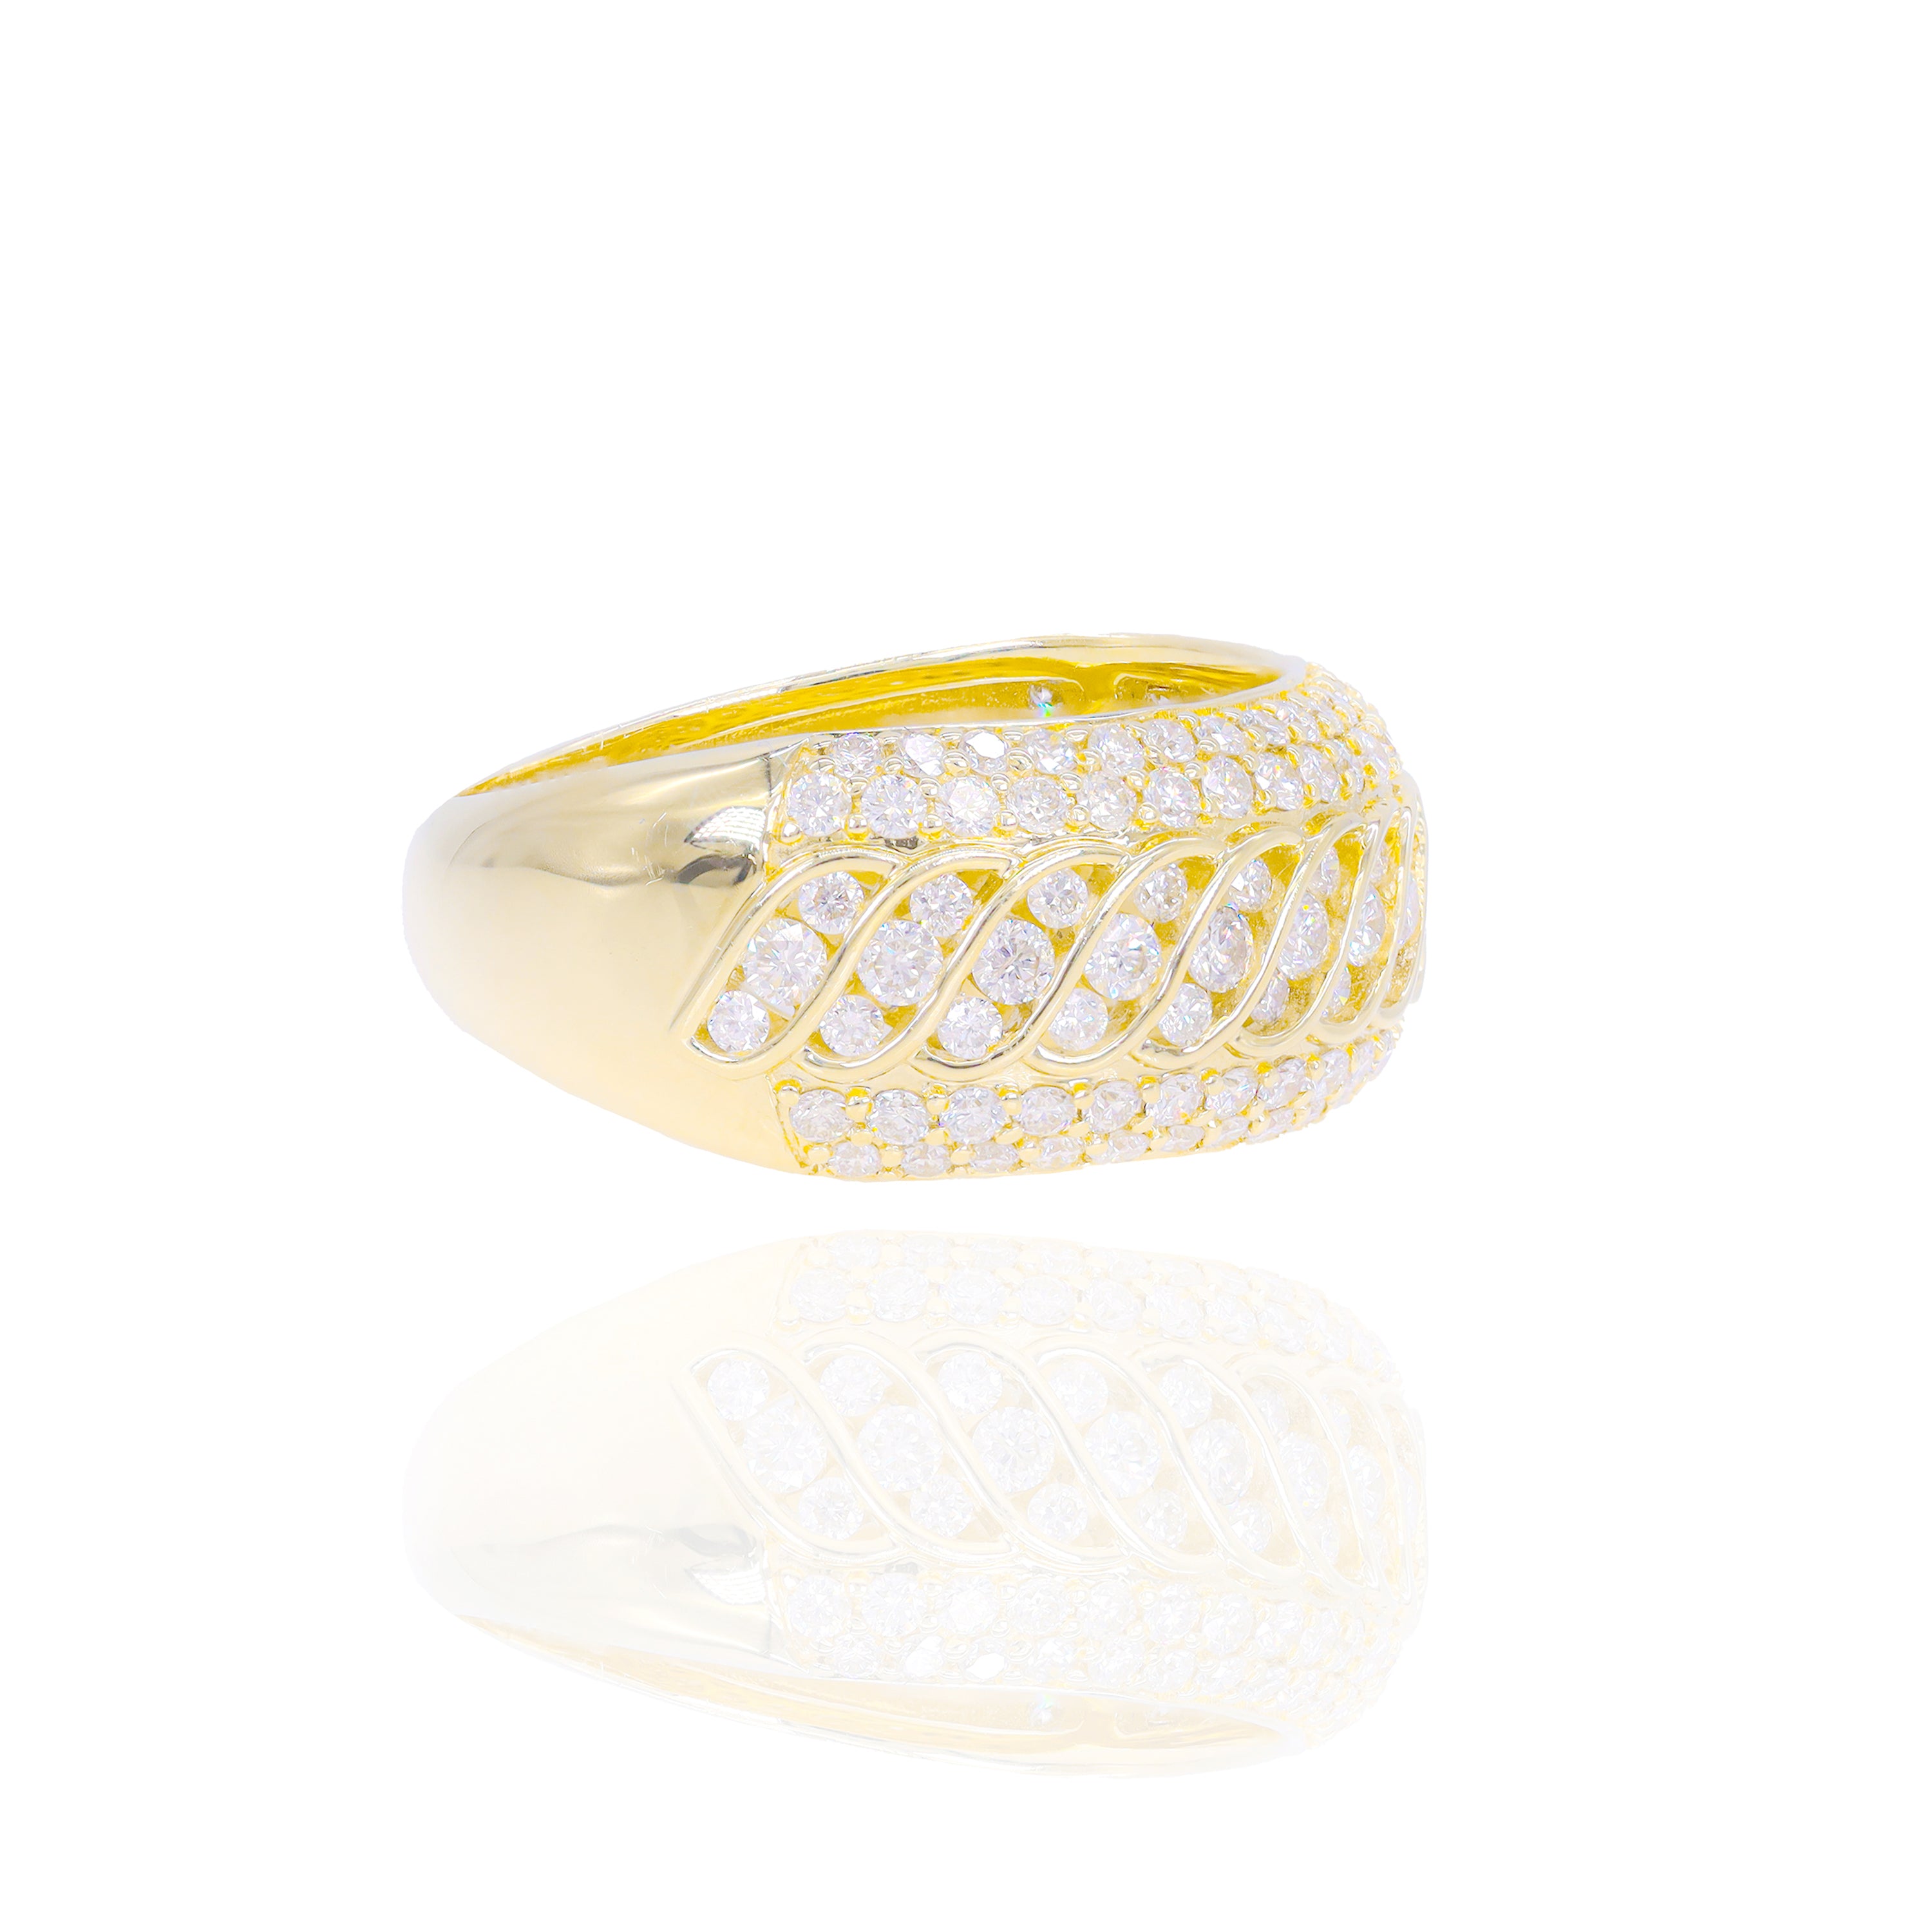 Spiral Design Chanel Set Diamond Ring Band